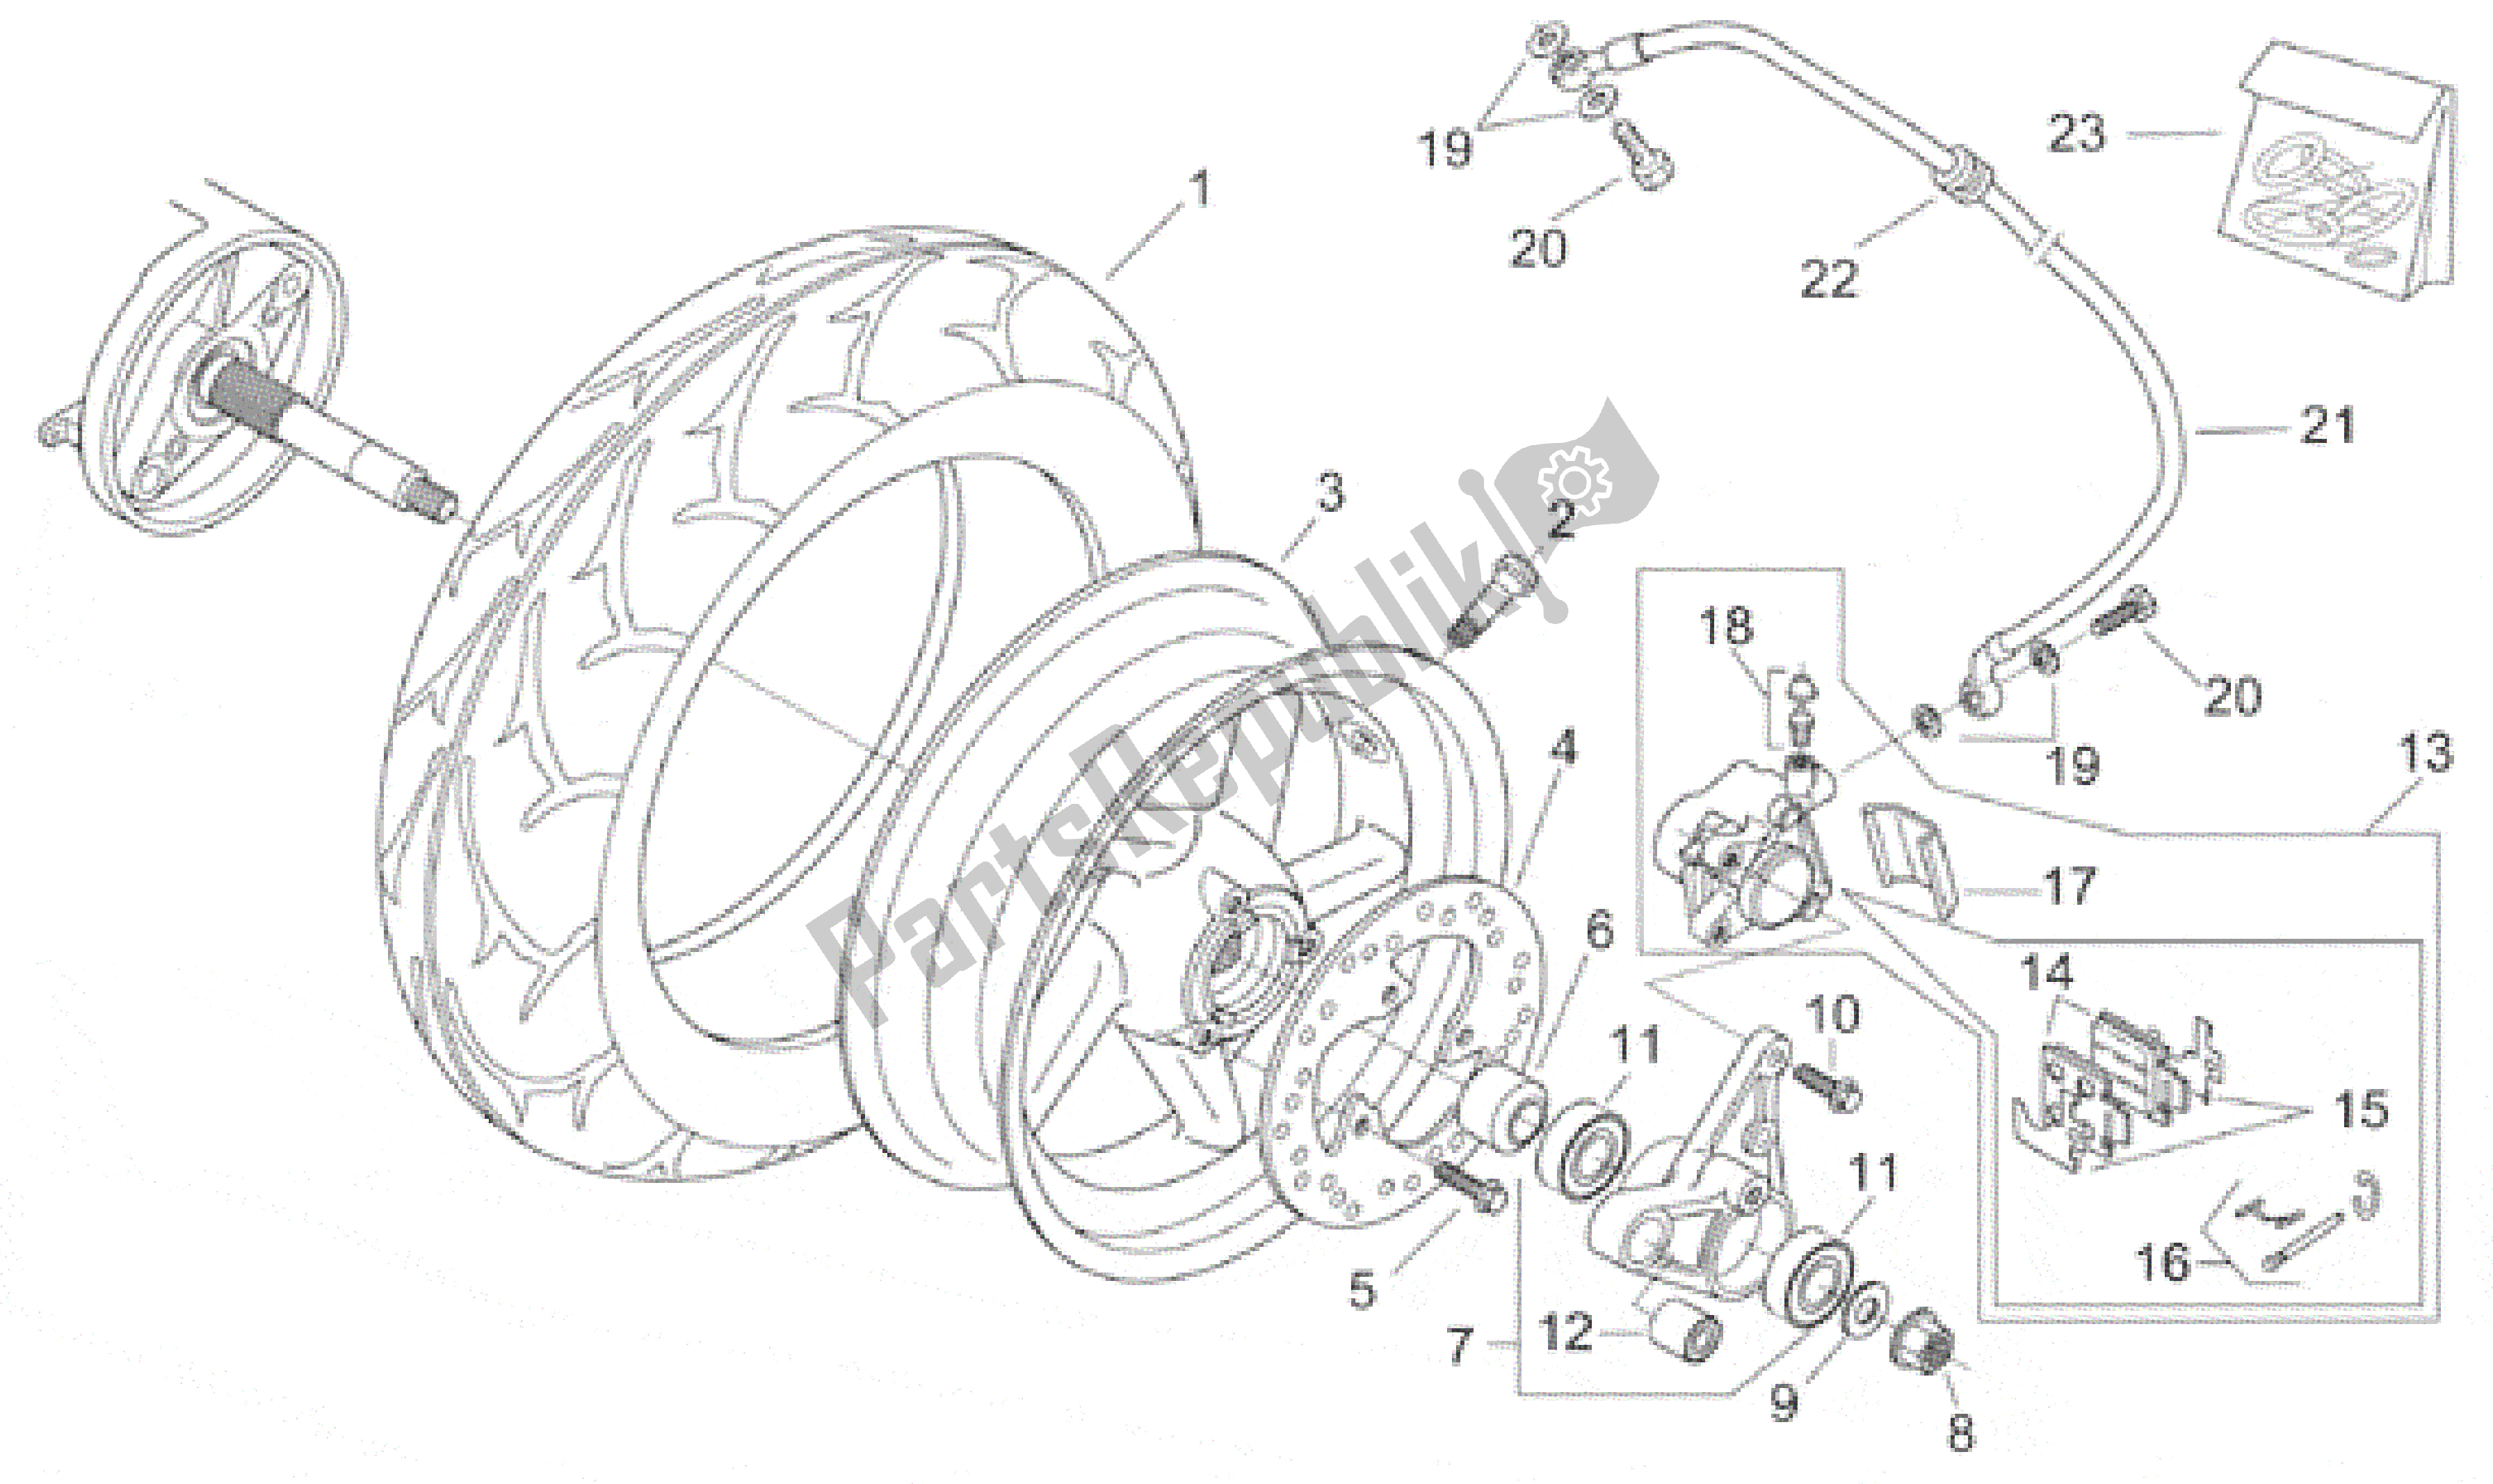 All parts for the Rear Wheel of the Aprilia Leonardo 125 1999 - 2001